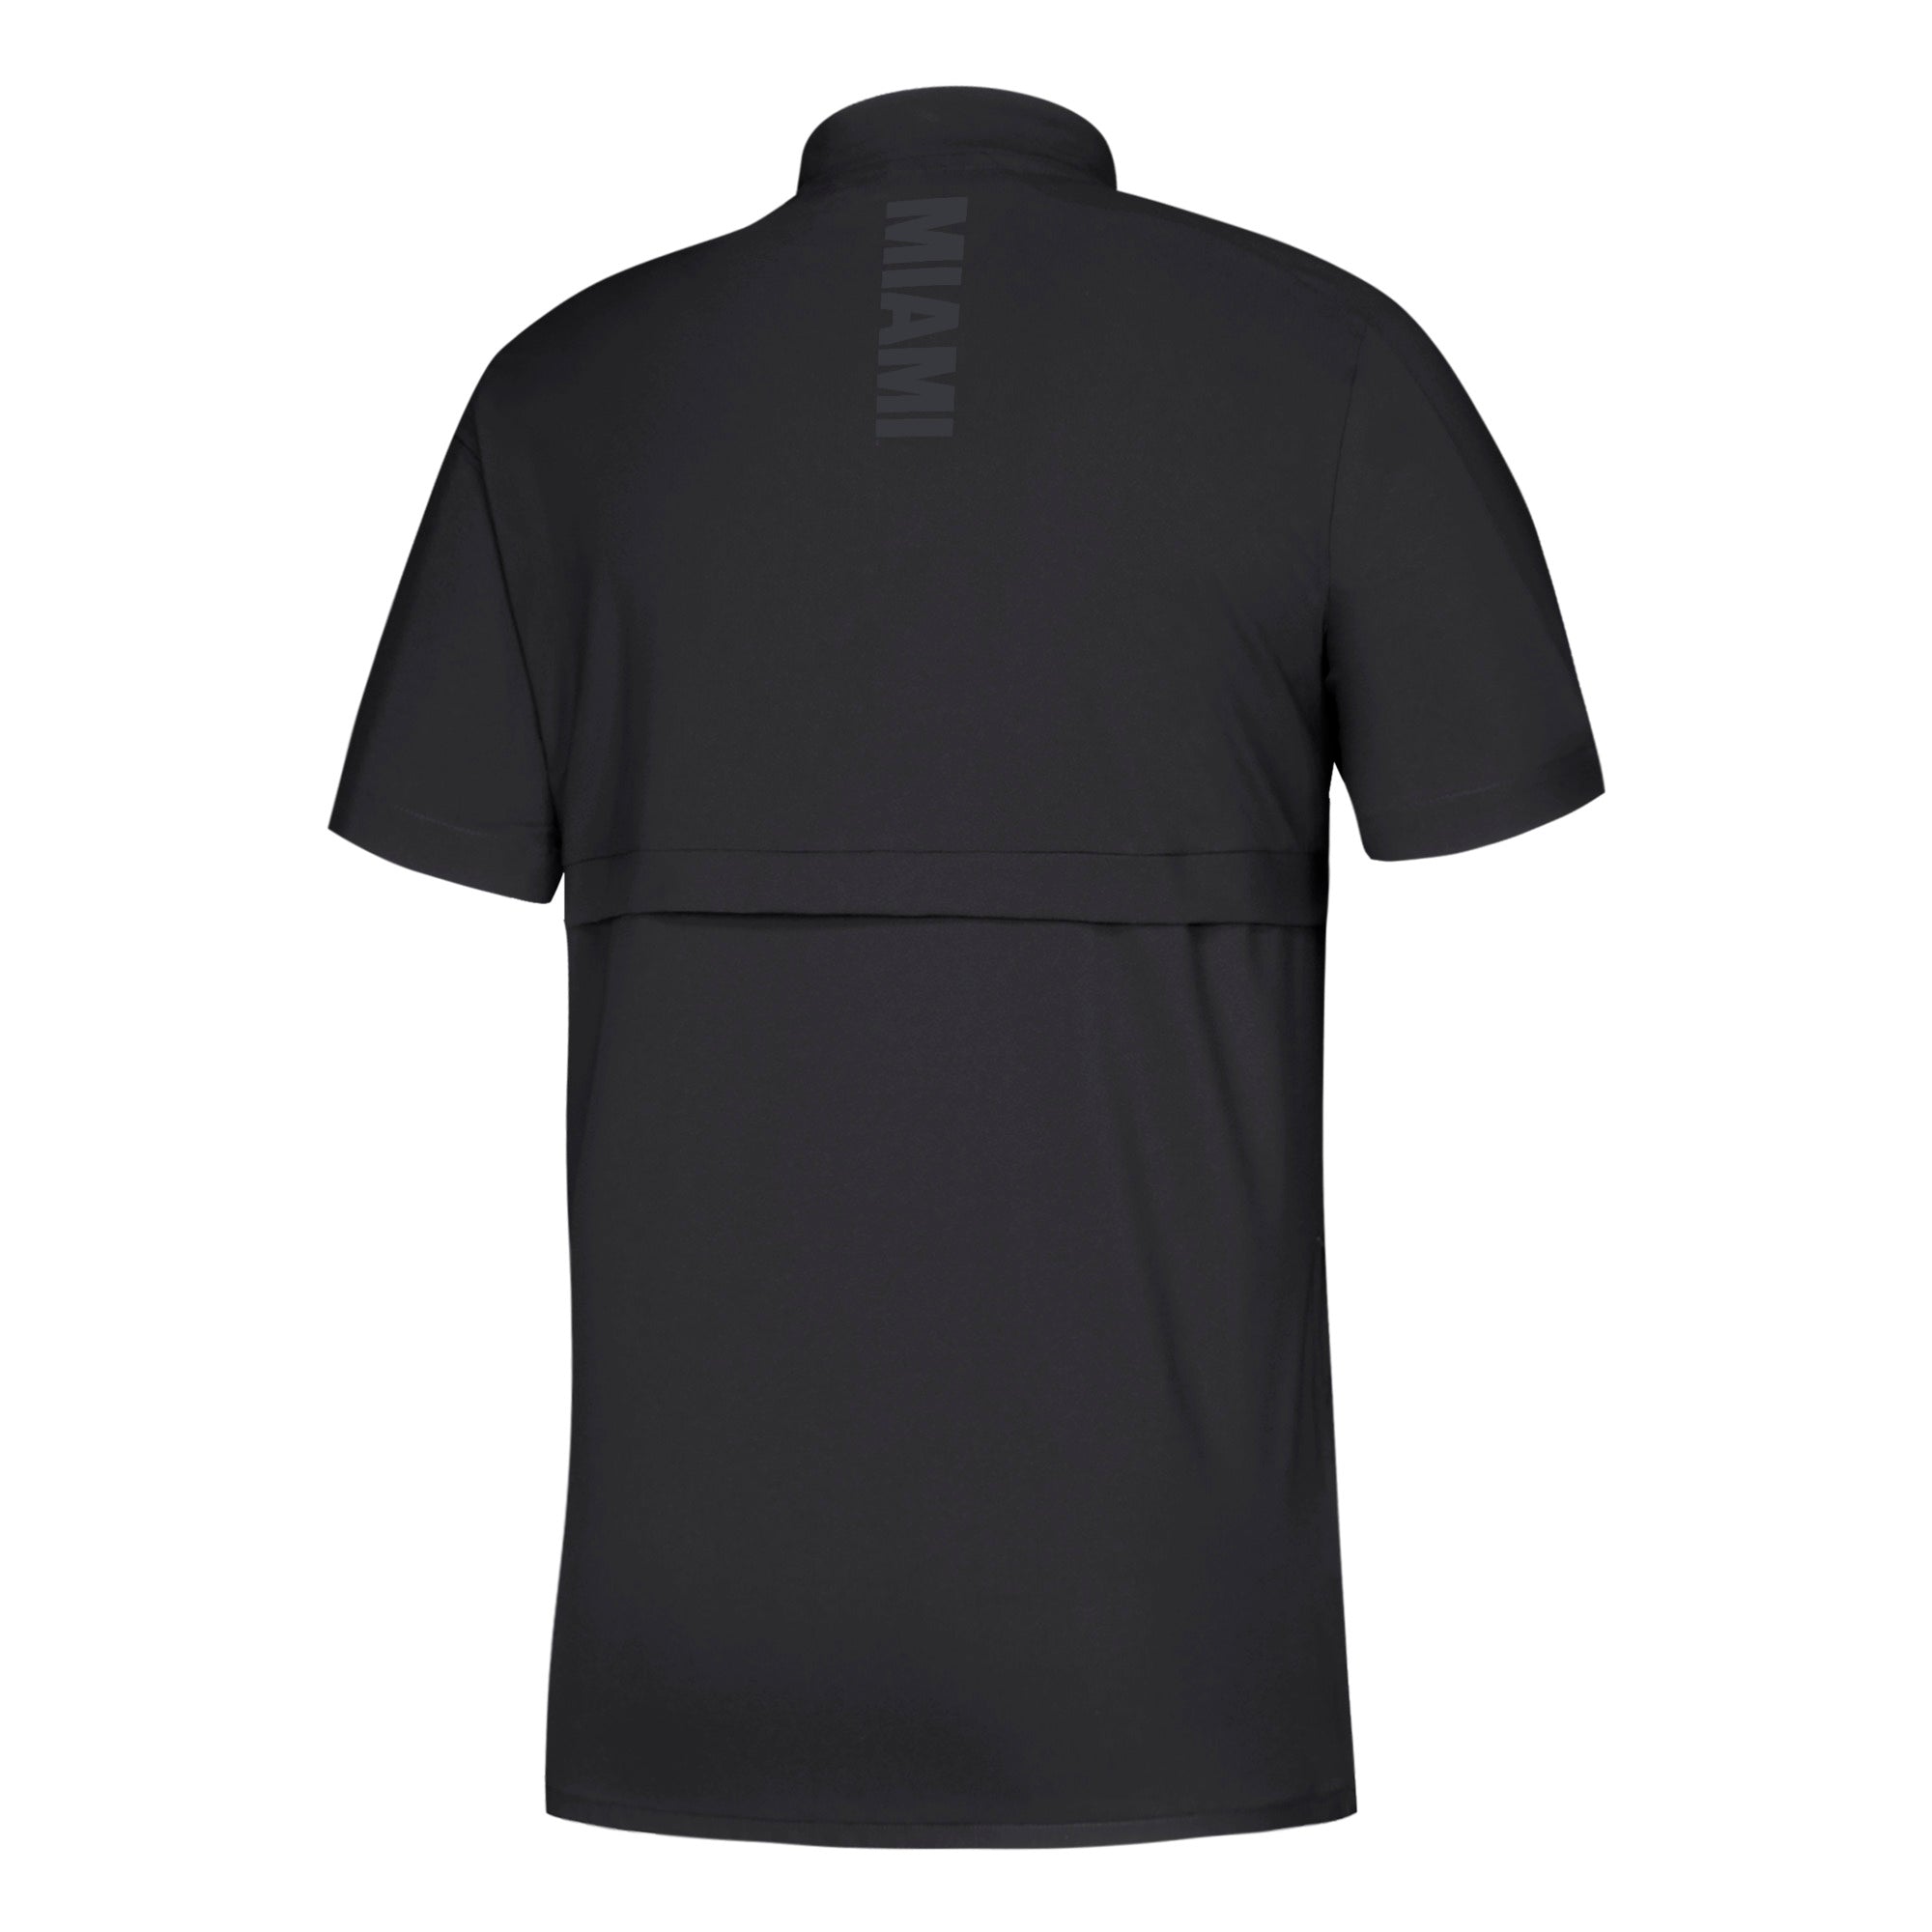 Miami Hurricanes adidas Game Mode Short Sleeve Woven 1/4 Zip - Black